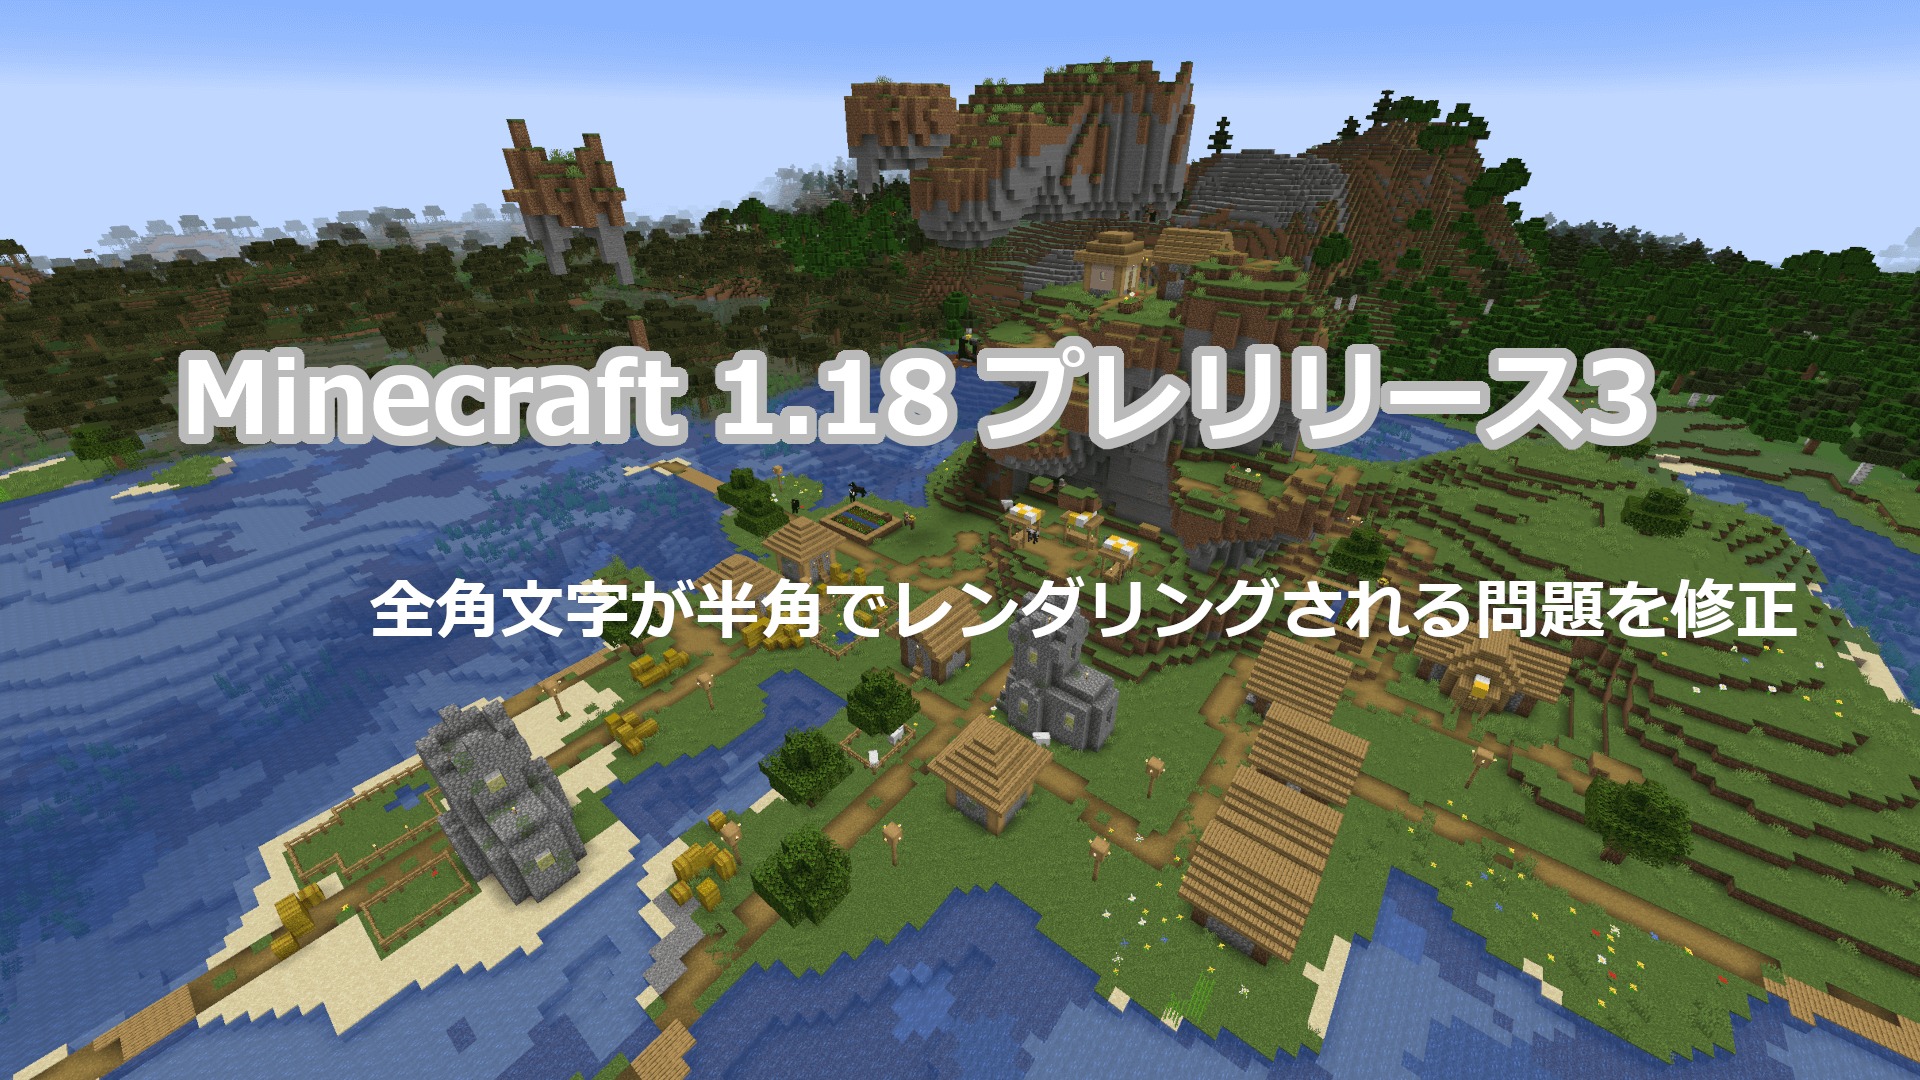 Minecraft 1.18 プレリリース3 アップデート情報｜全角文字に関する修正含む18件のバグを解消